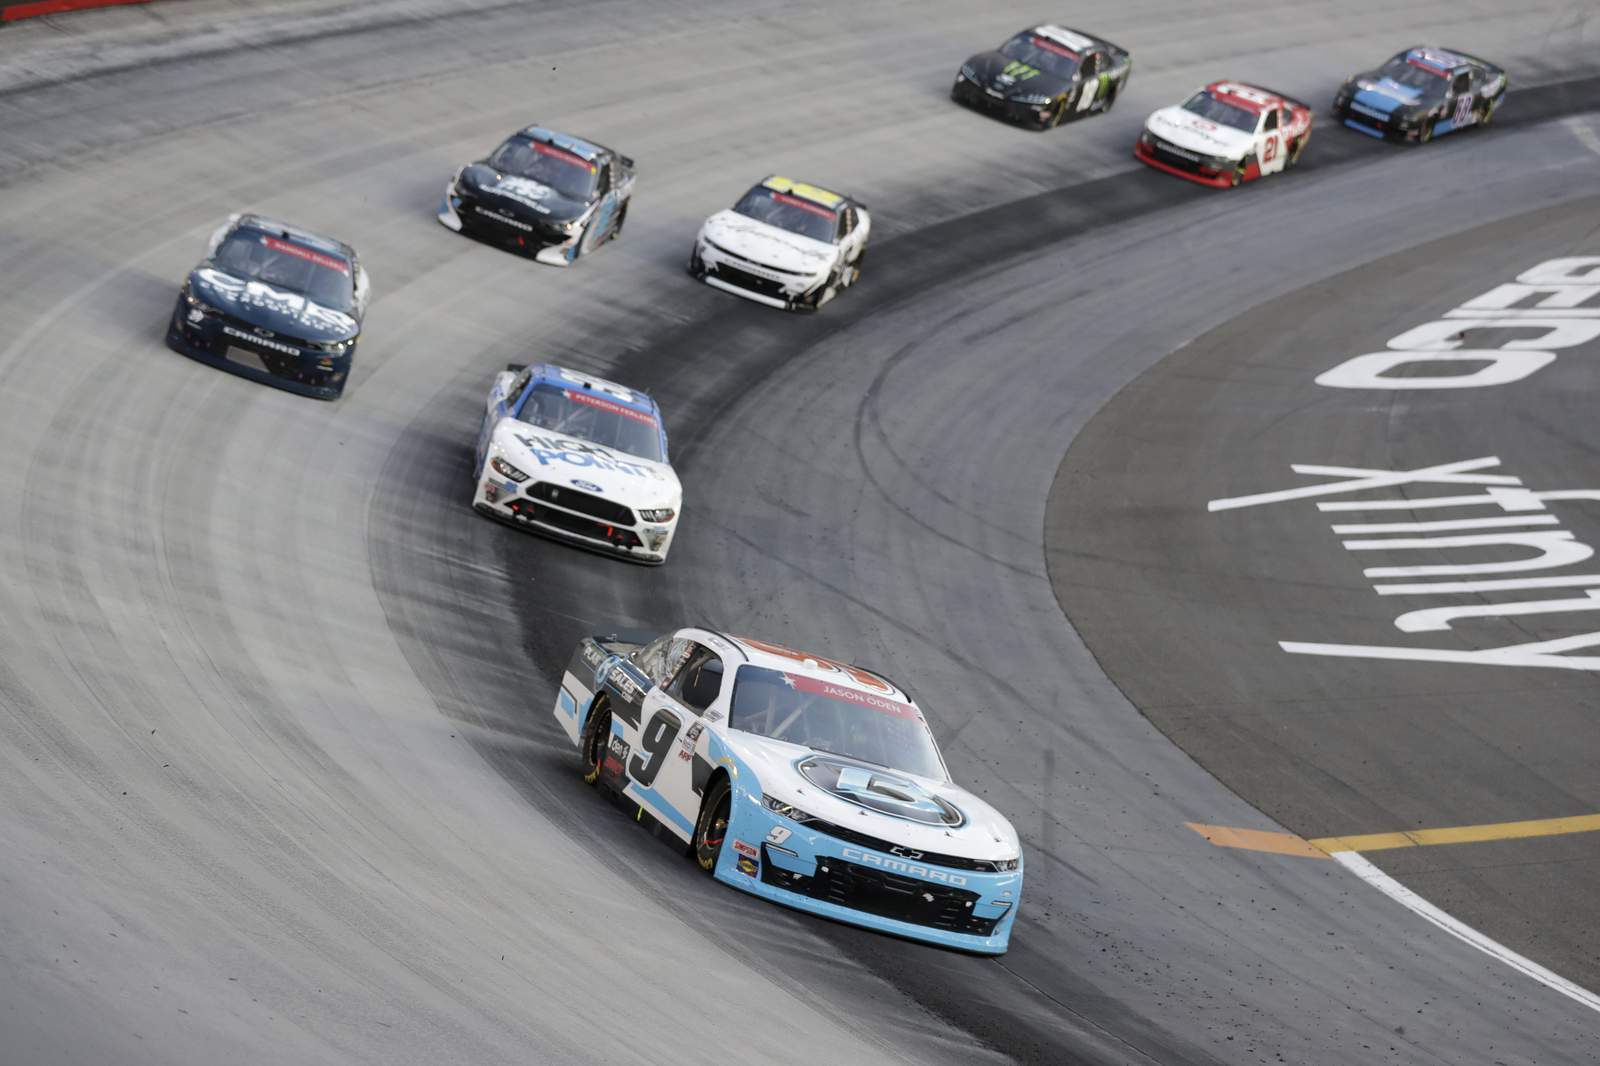 Racer leaves NASCAR over Confederate flag decision